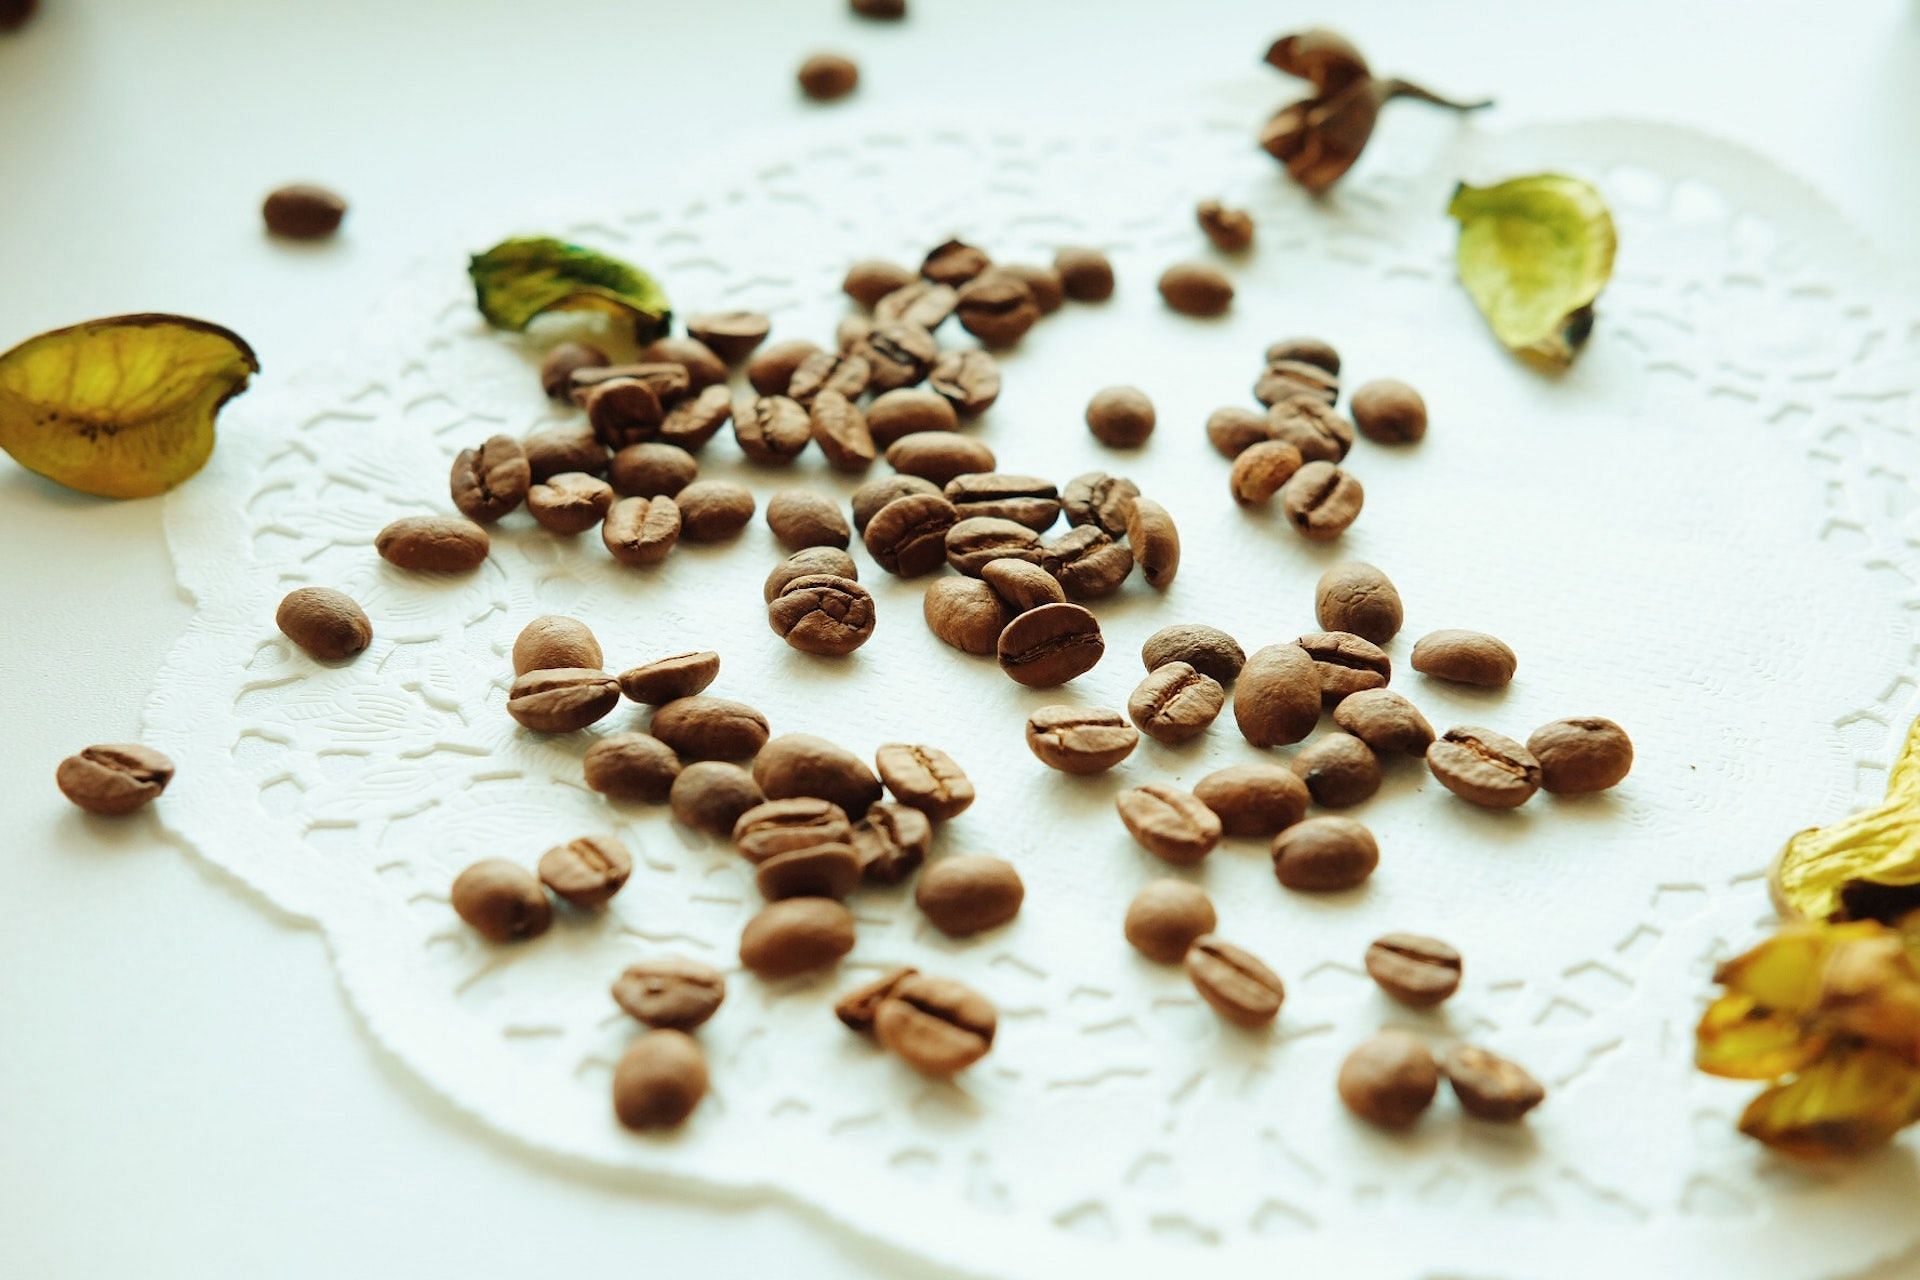 Cocoa is a good source of flavonoids. (Photo via Pexels/Елена Черных)